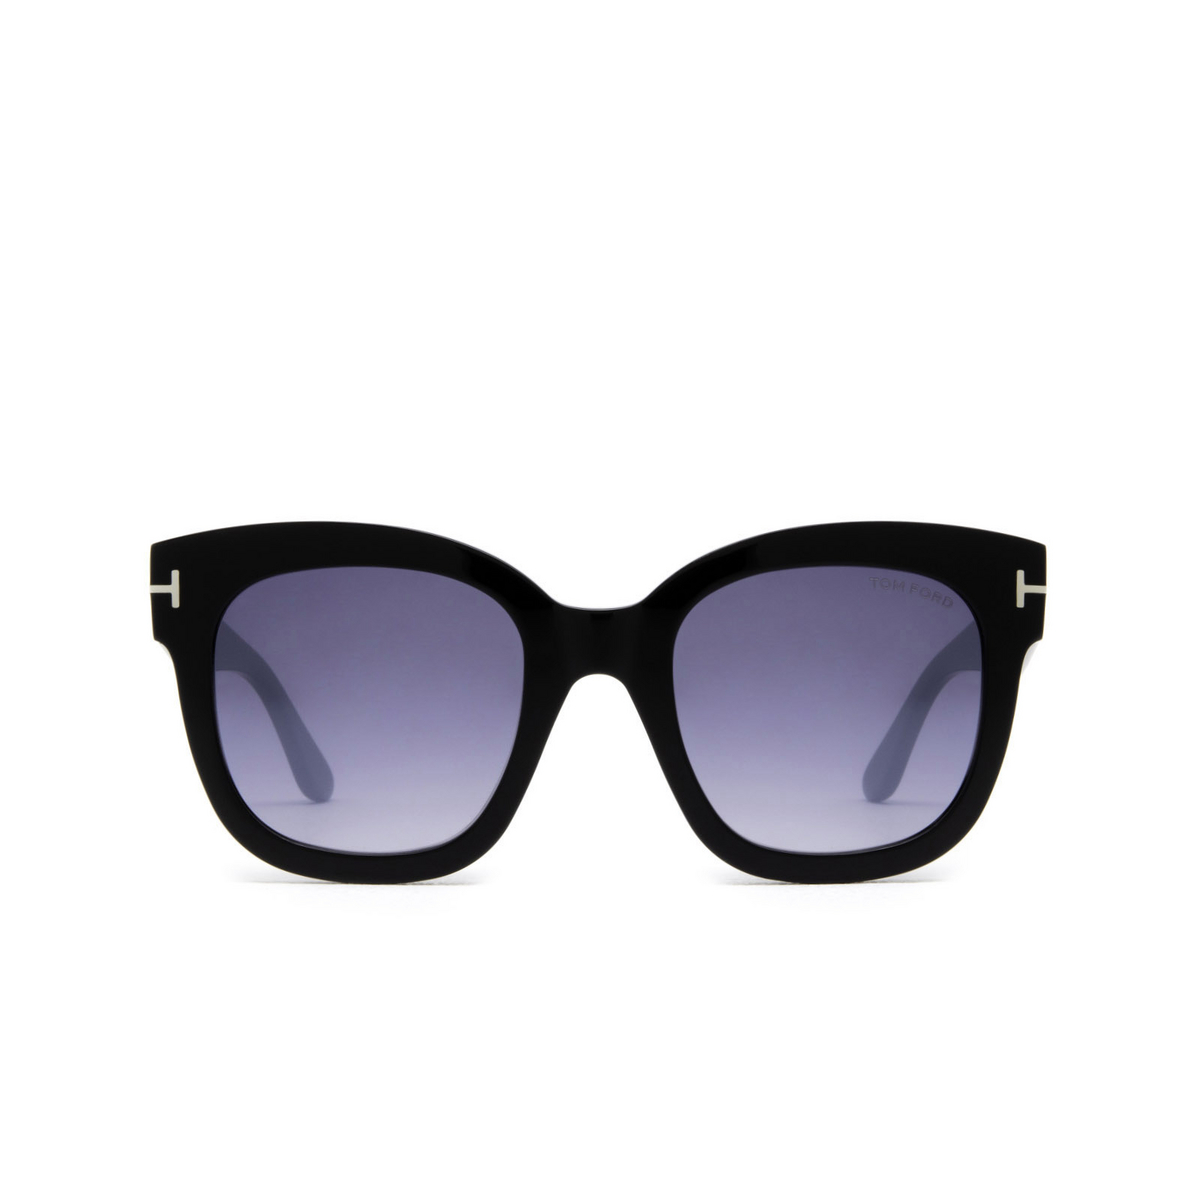 Tom Ford BEATRIX-02 Sunglasses 01C Black - front view